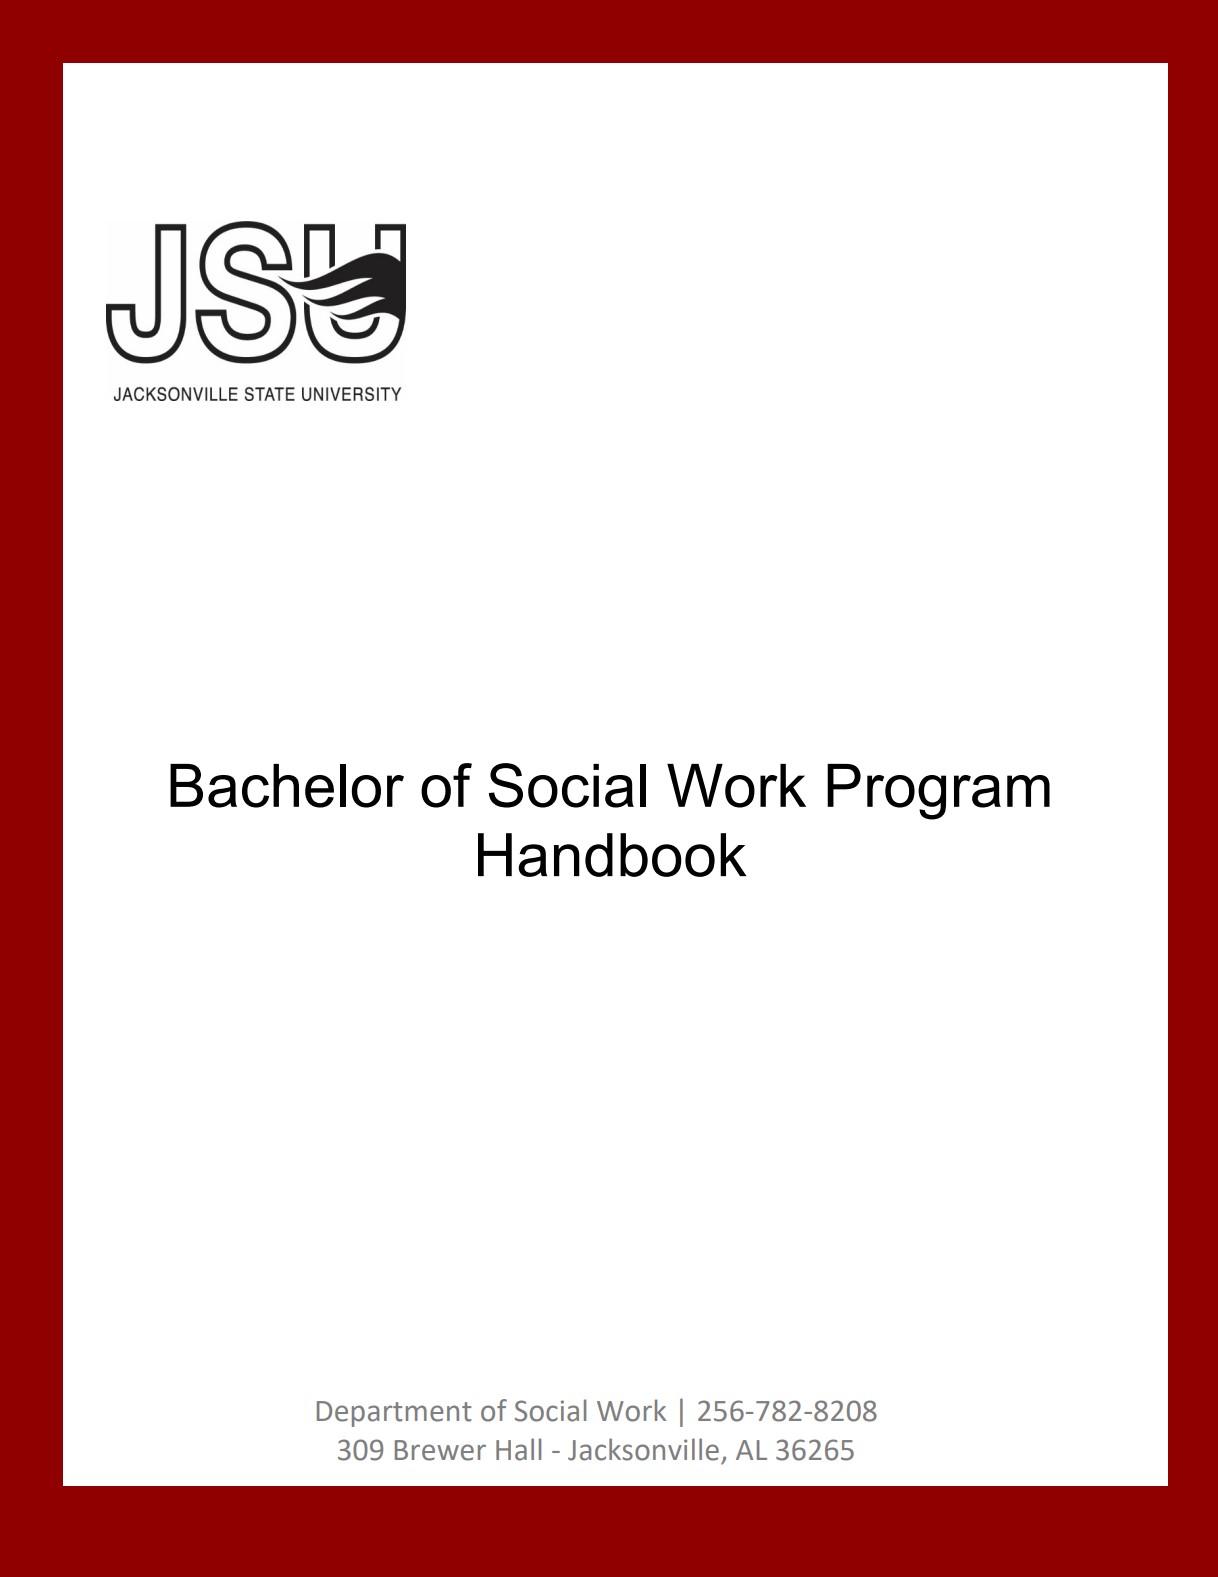 JSU BSW Program Handbook Cover